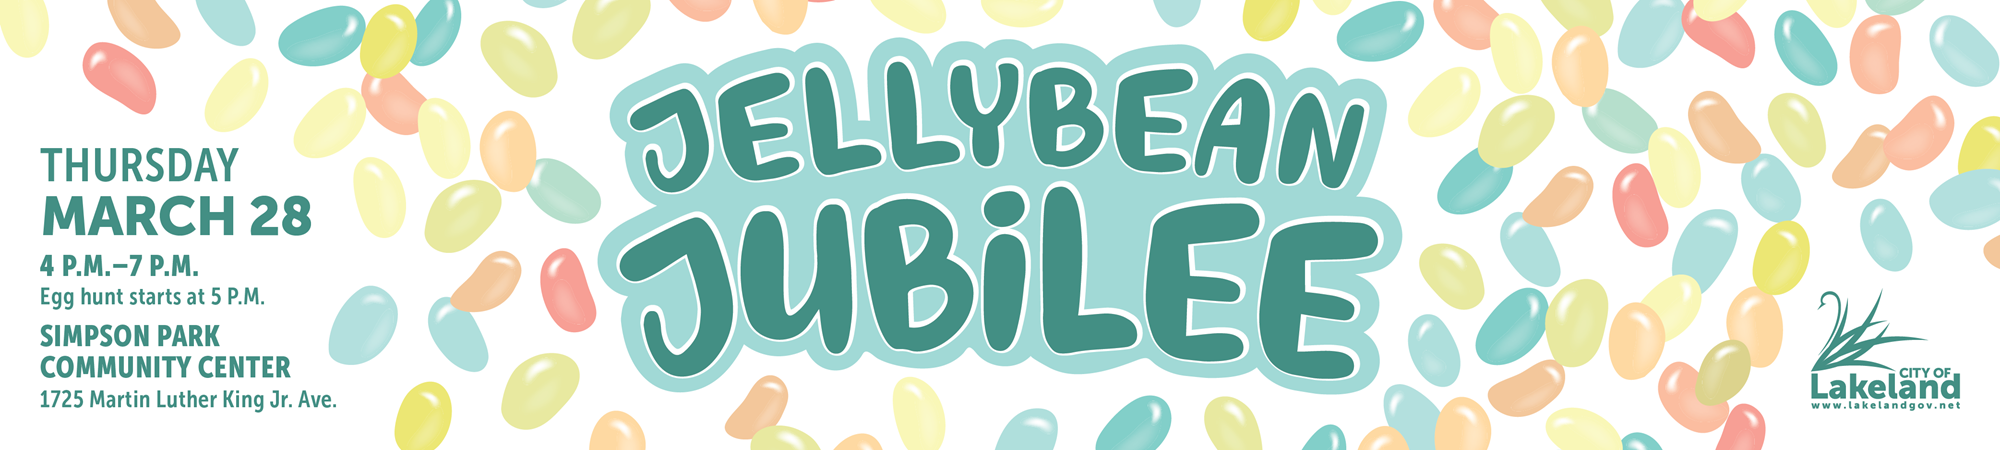 Jellybean Jubilee event graphic